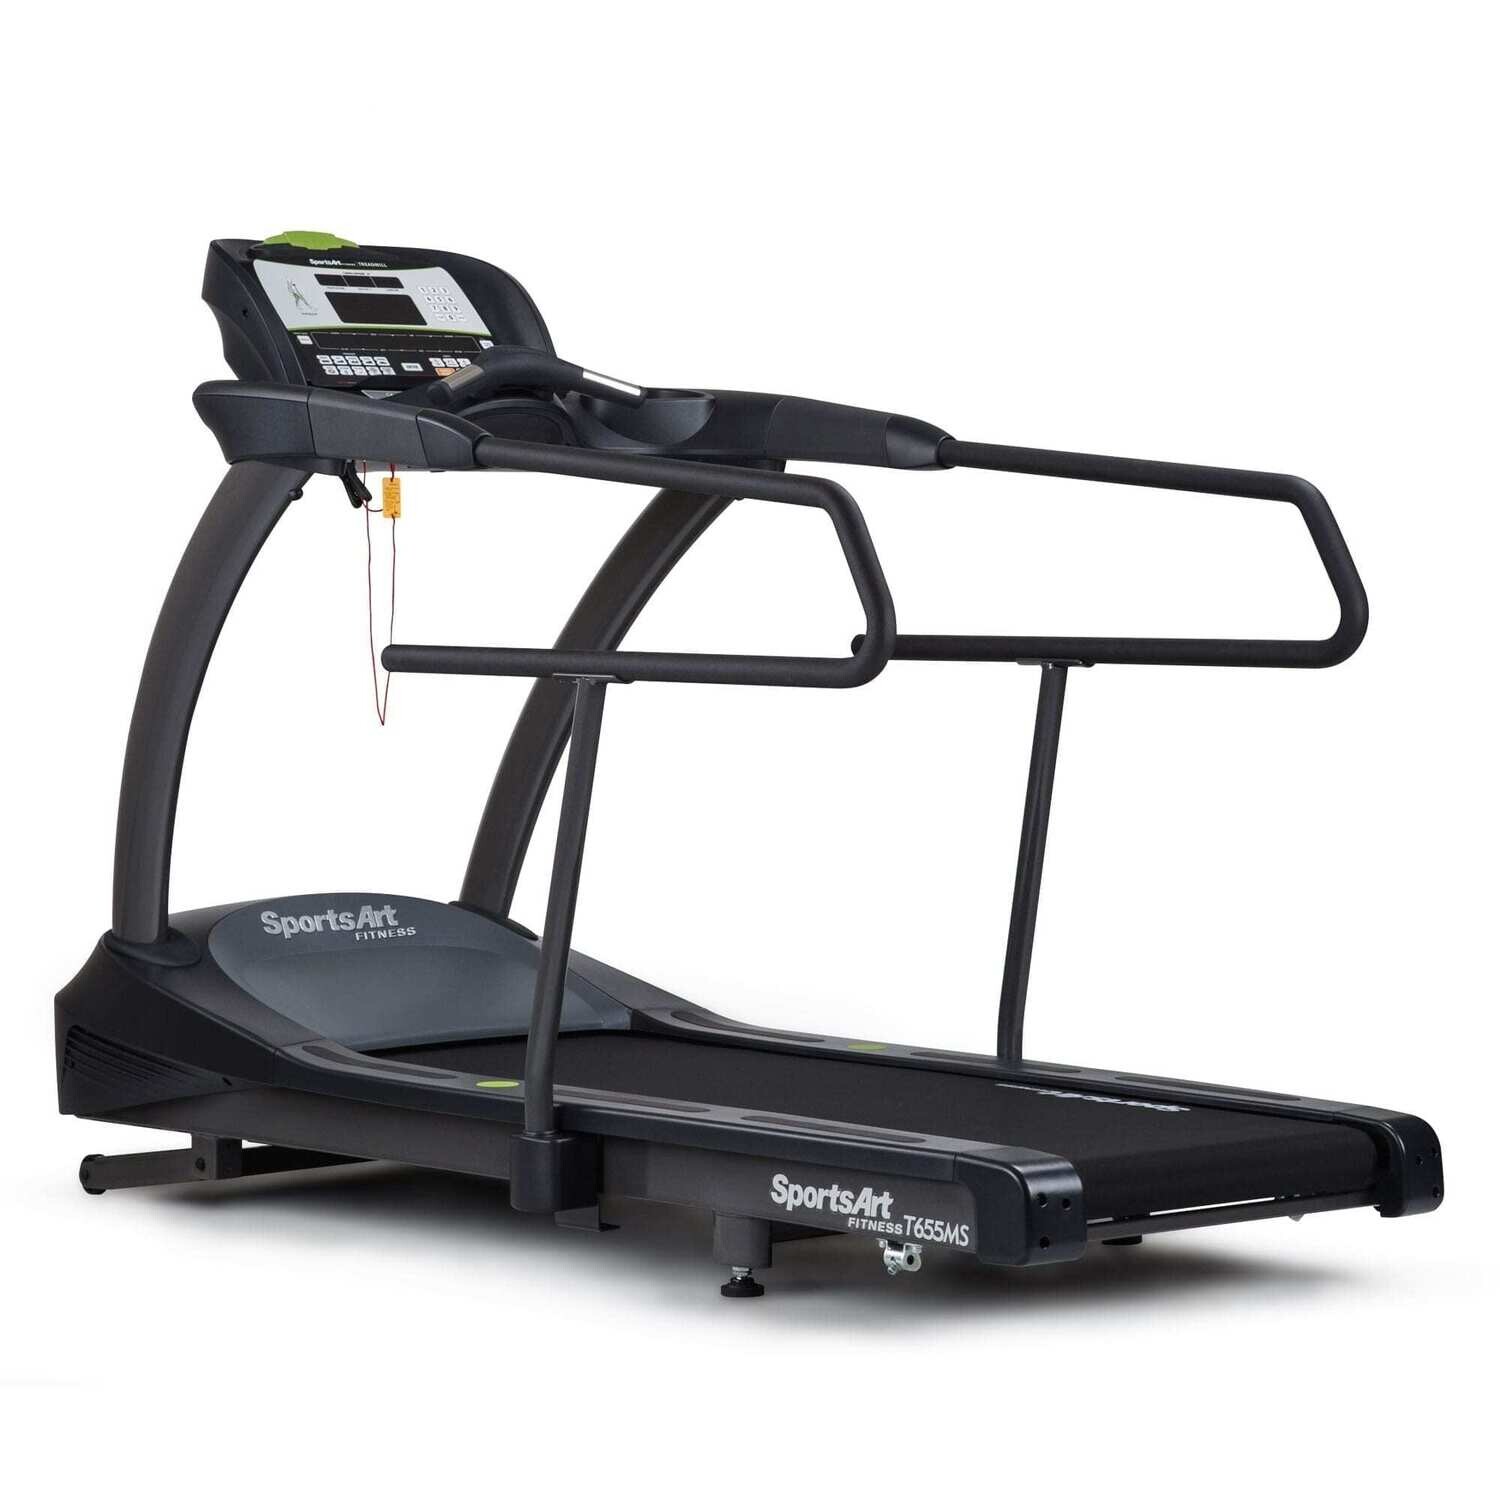 SportsArt T655MS Medical Rehabilitation Treadmill